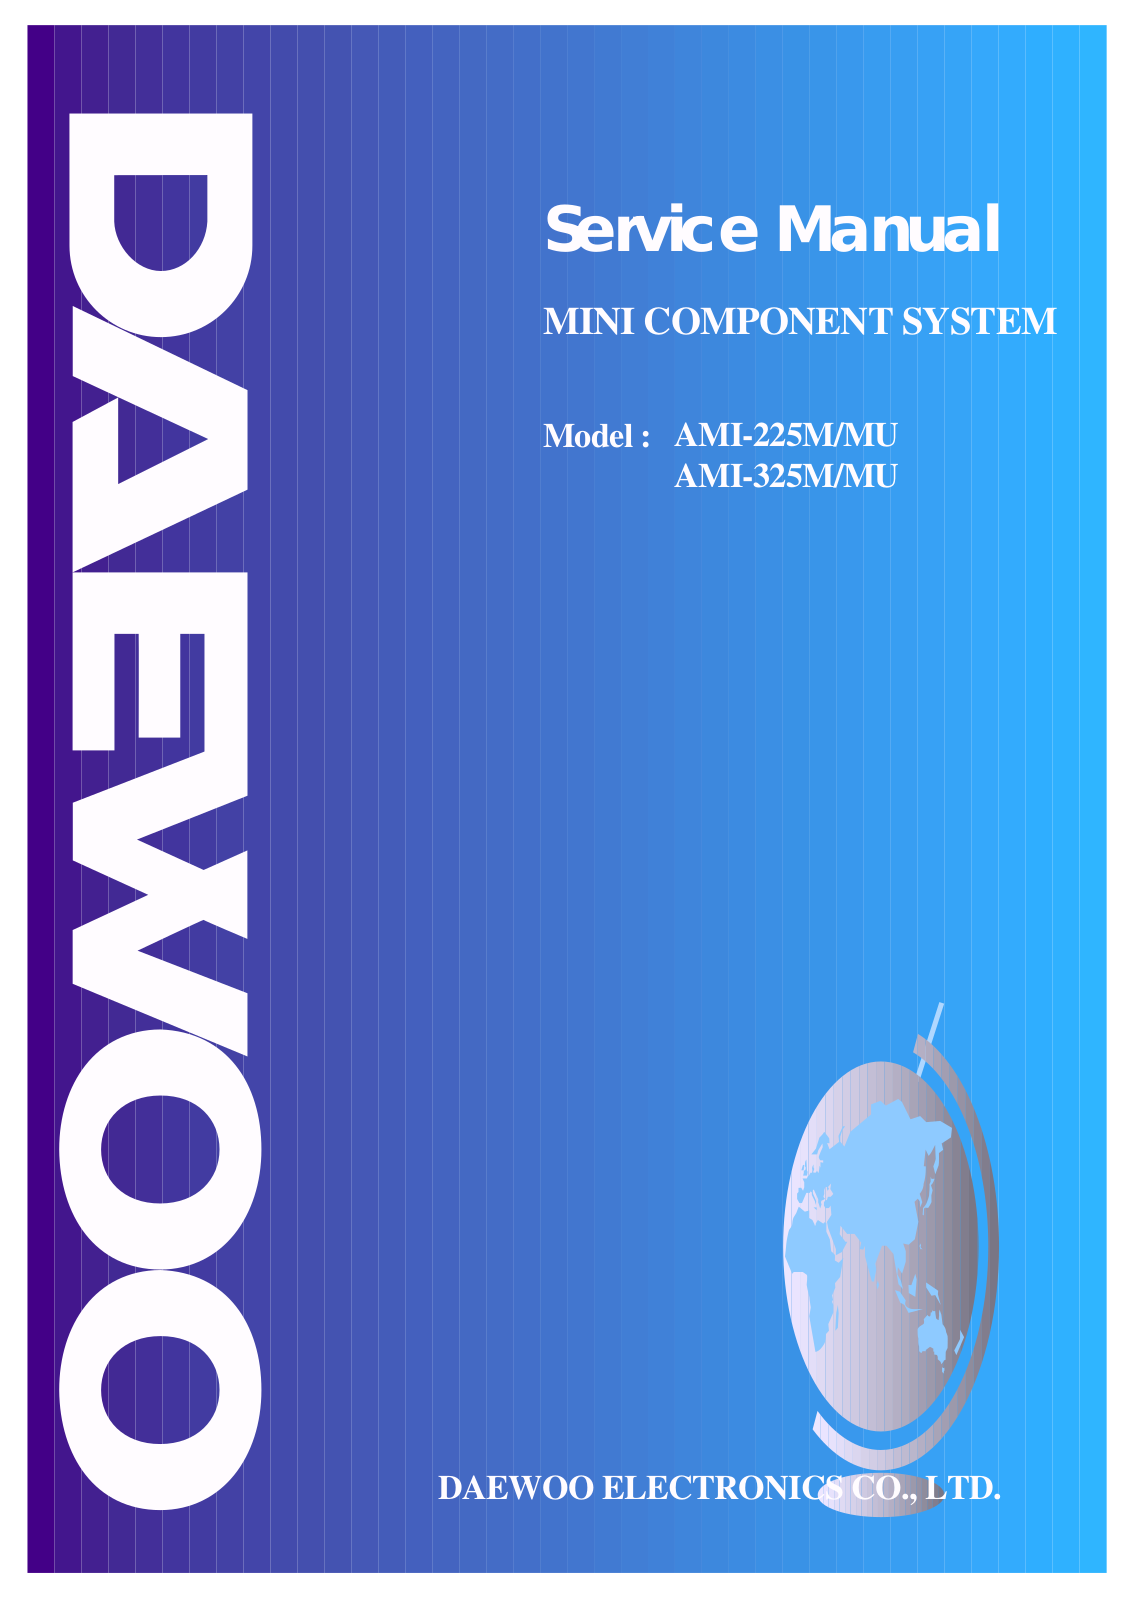 Daewoo AMI-225M, AMI-225, AMI-325M, AMI-325MMU Service Manual